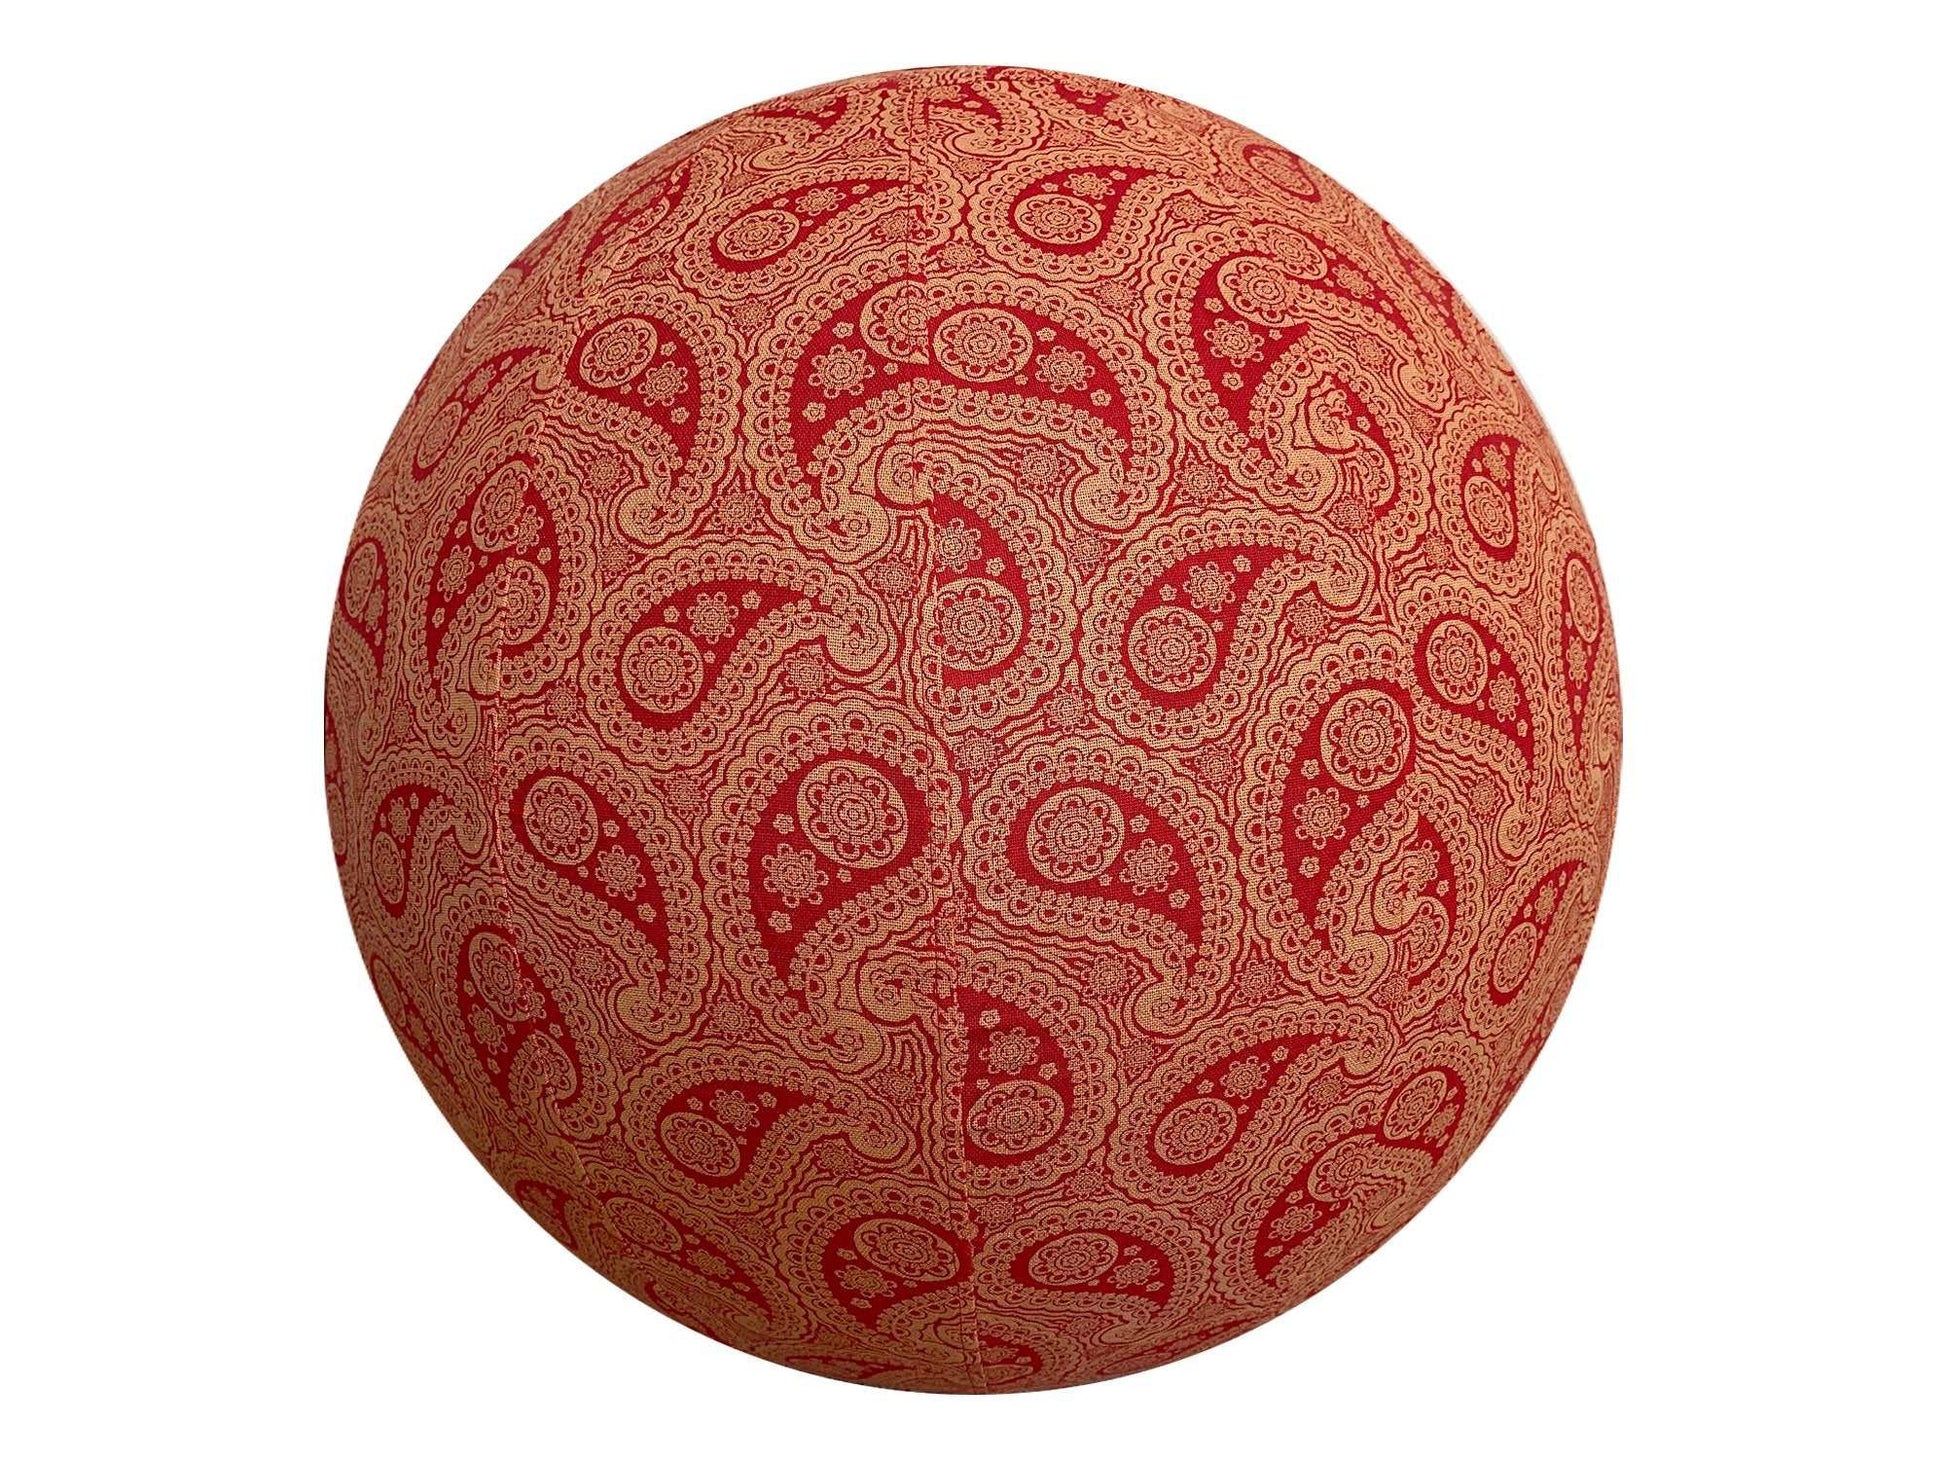 75cm Balance Ball / Yoga Ball Cover: Poppy Paisley